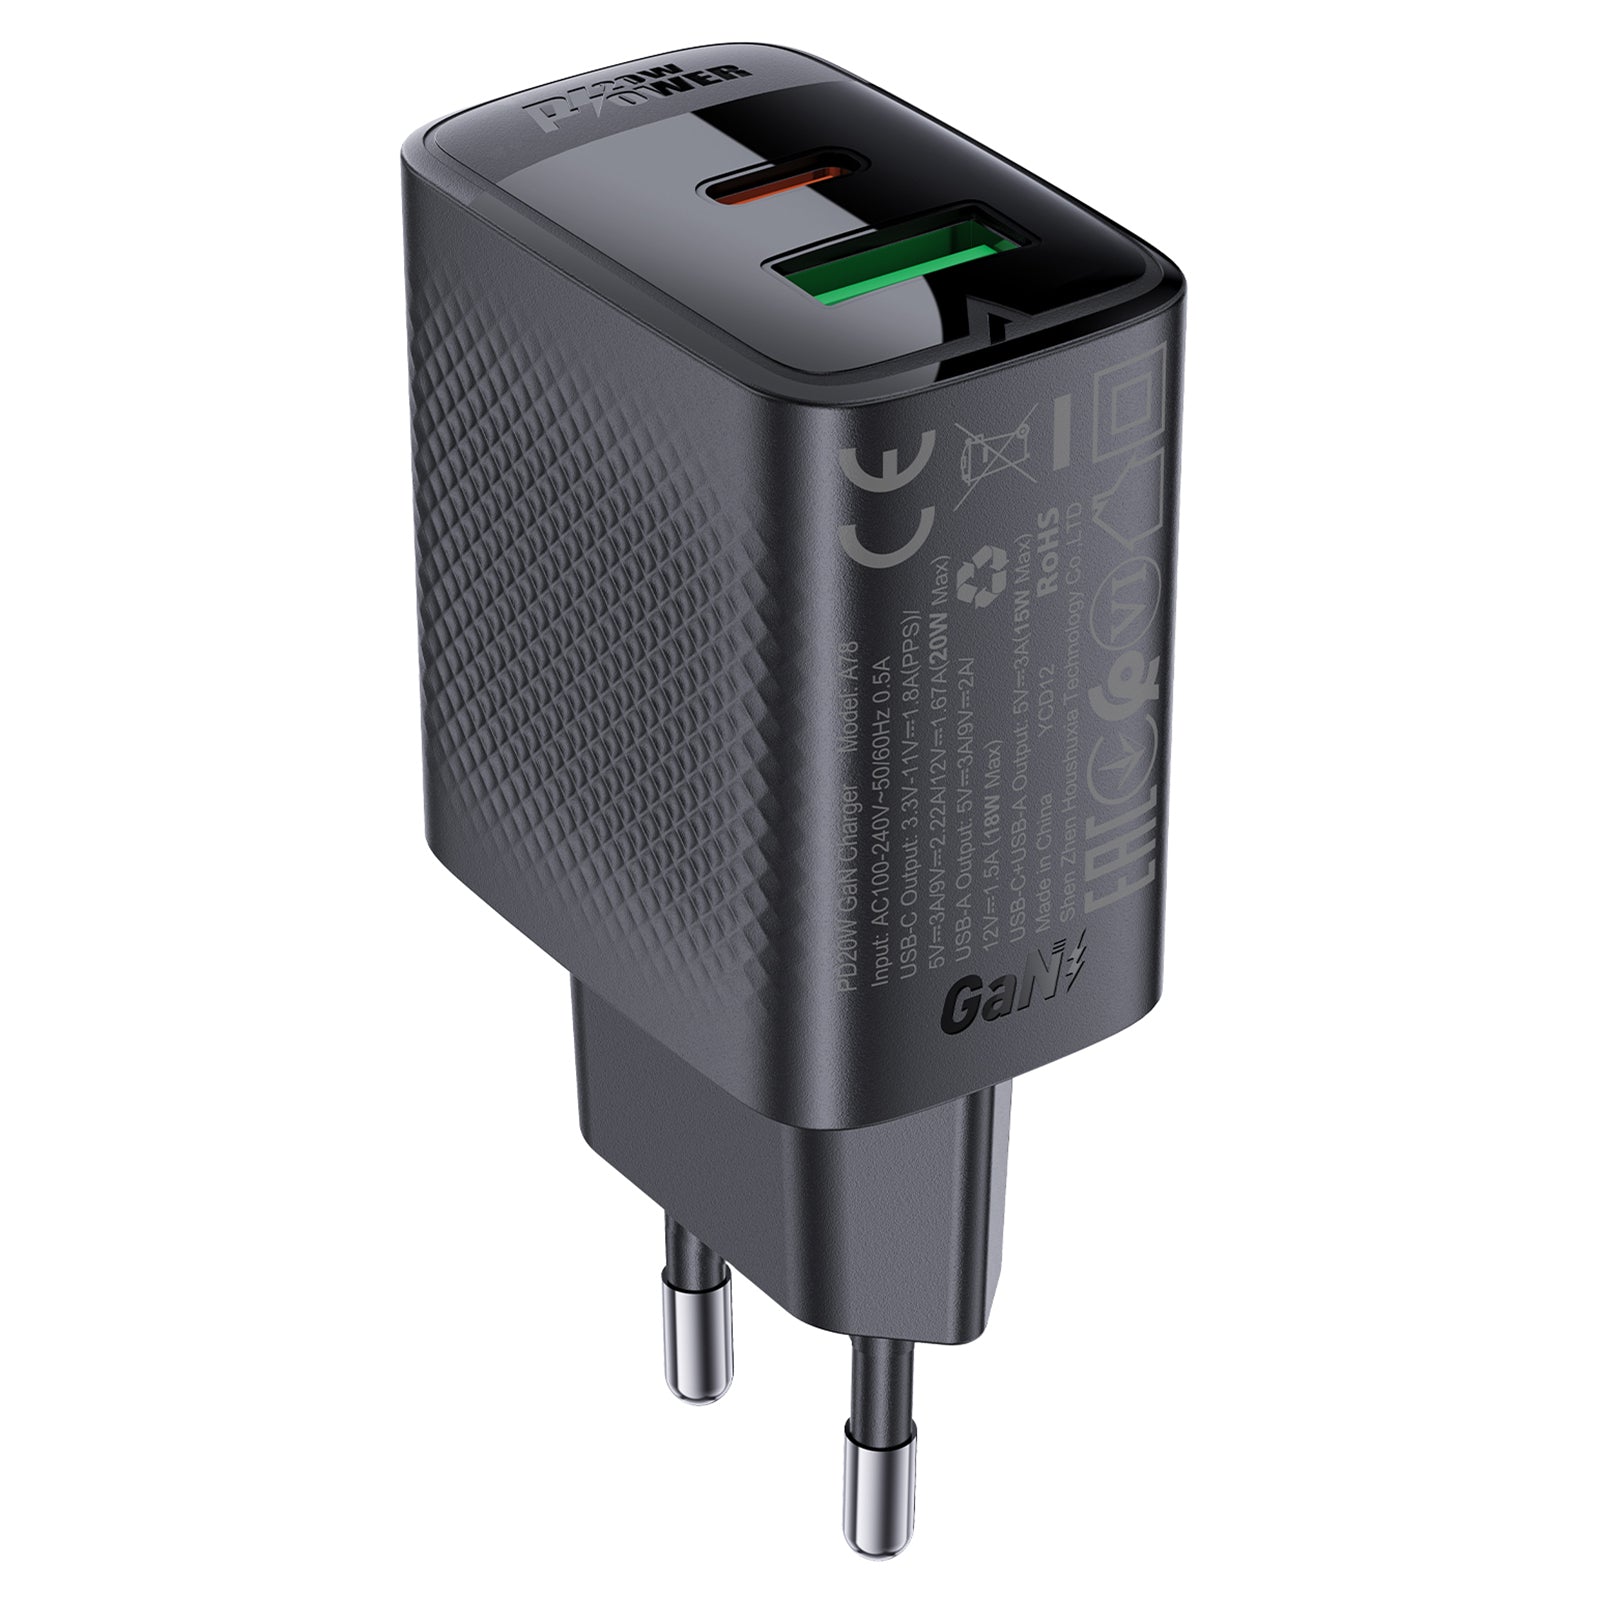 ACEFAST A78 GaN Wall Charger Plug PD 20W USB+Type-C Charging Adapter (EU Plug)